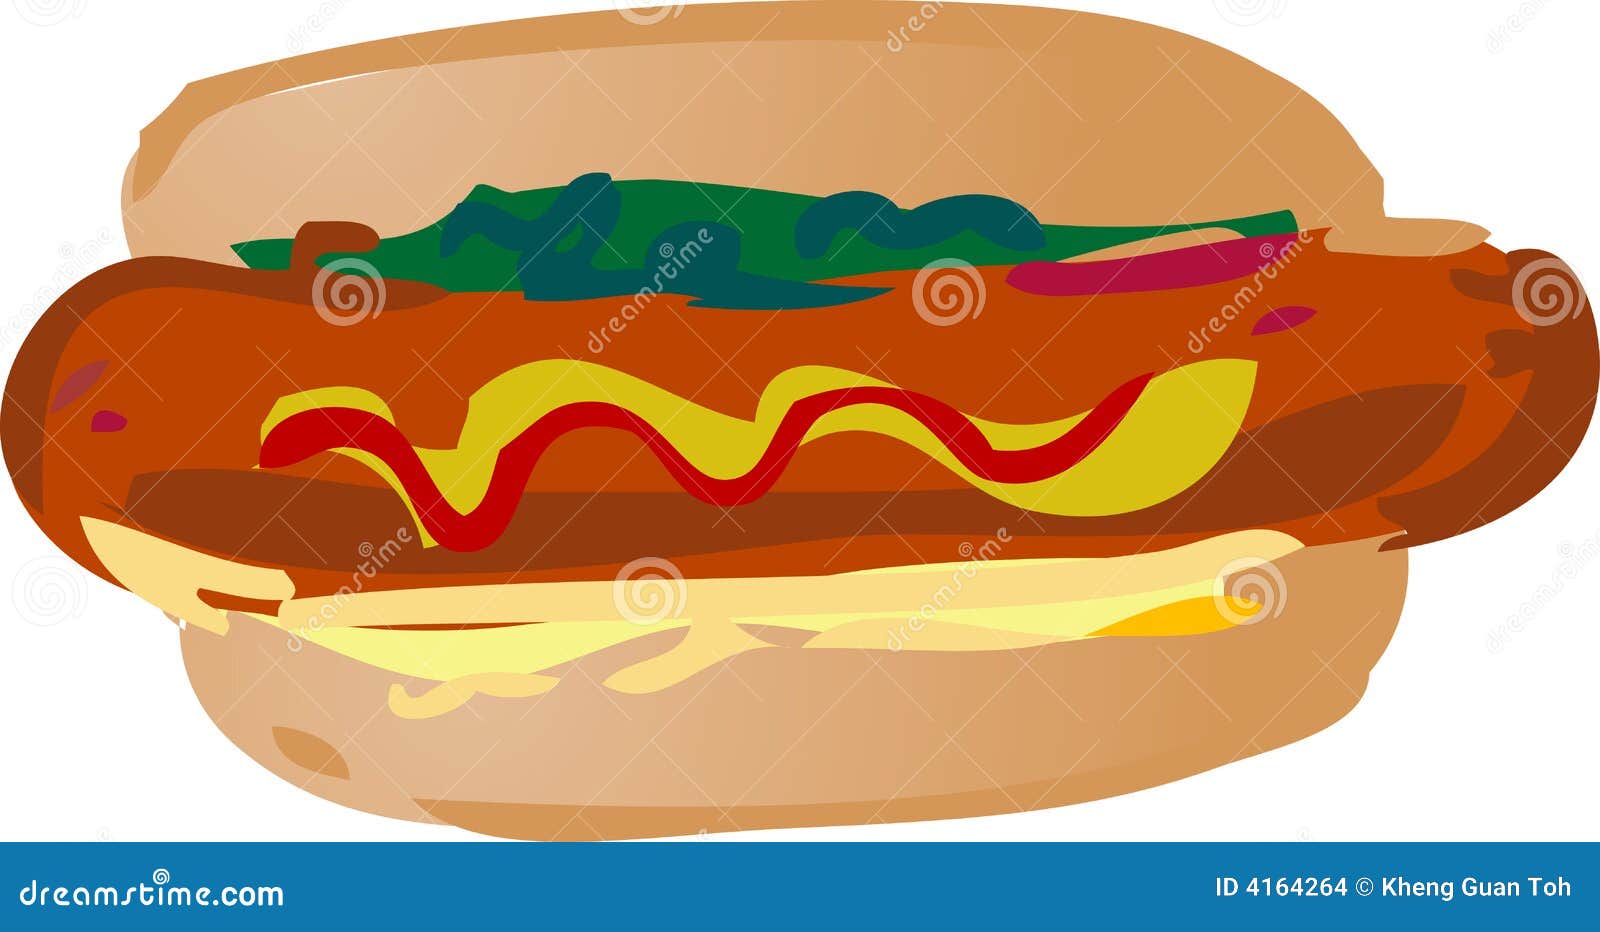 Hot dog illustration stock vector. Illustration of hotdog - 4164264